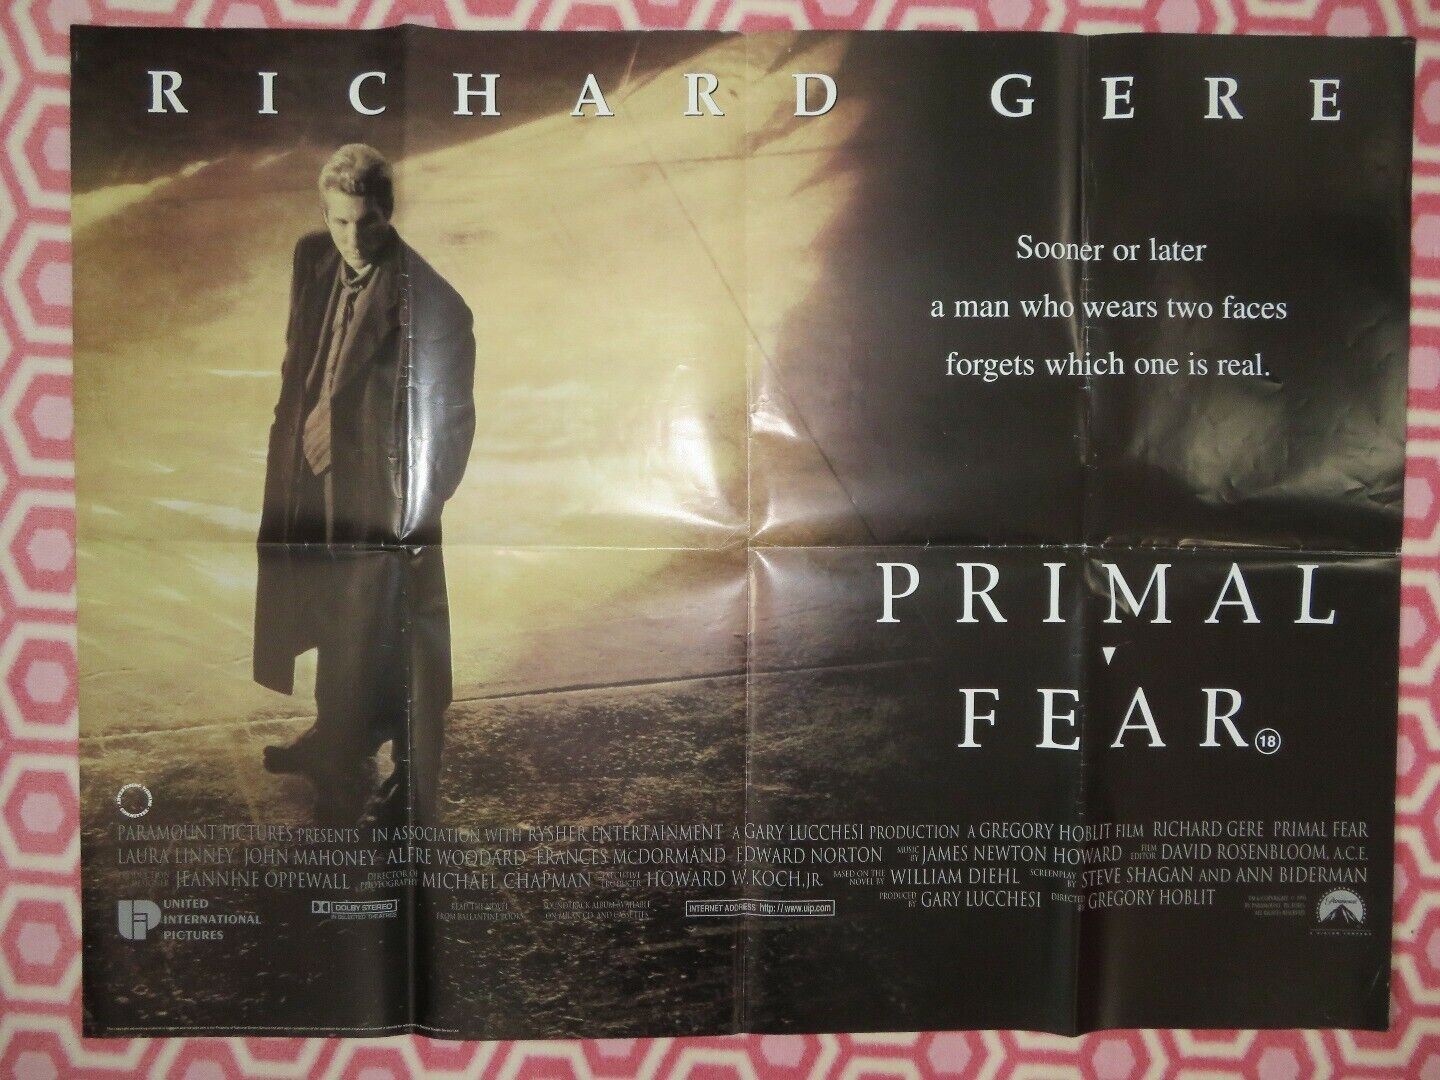 PRIMAL FEAR BRITISH QUAD (30"x40") POSTERRICHARD GERE EDWARD NORTON 1995